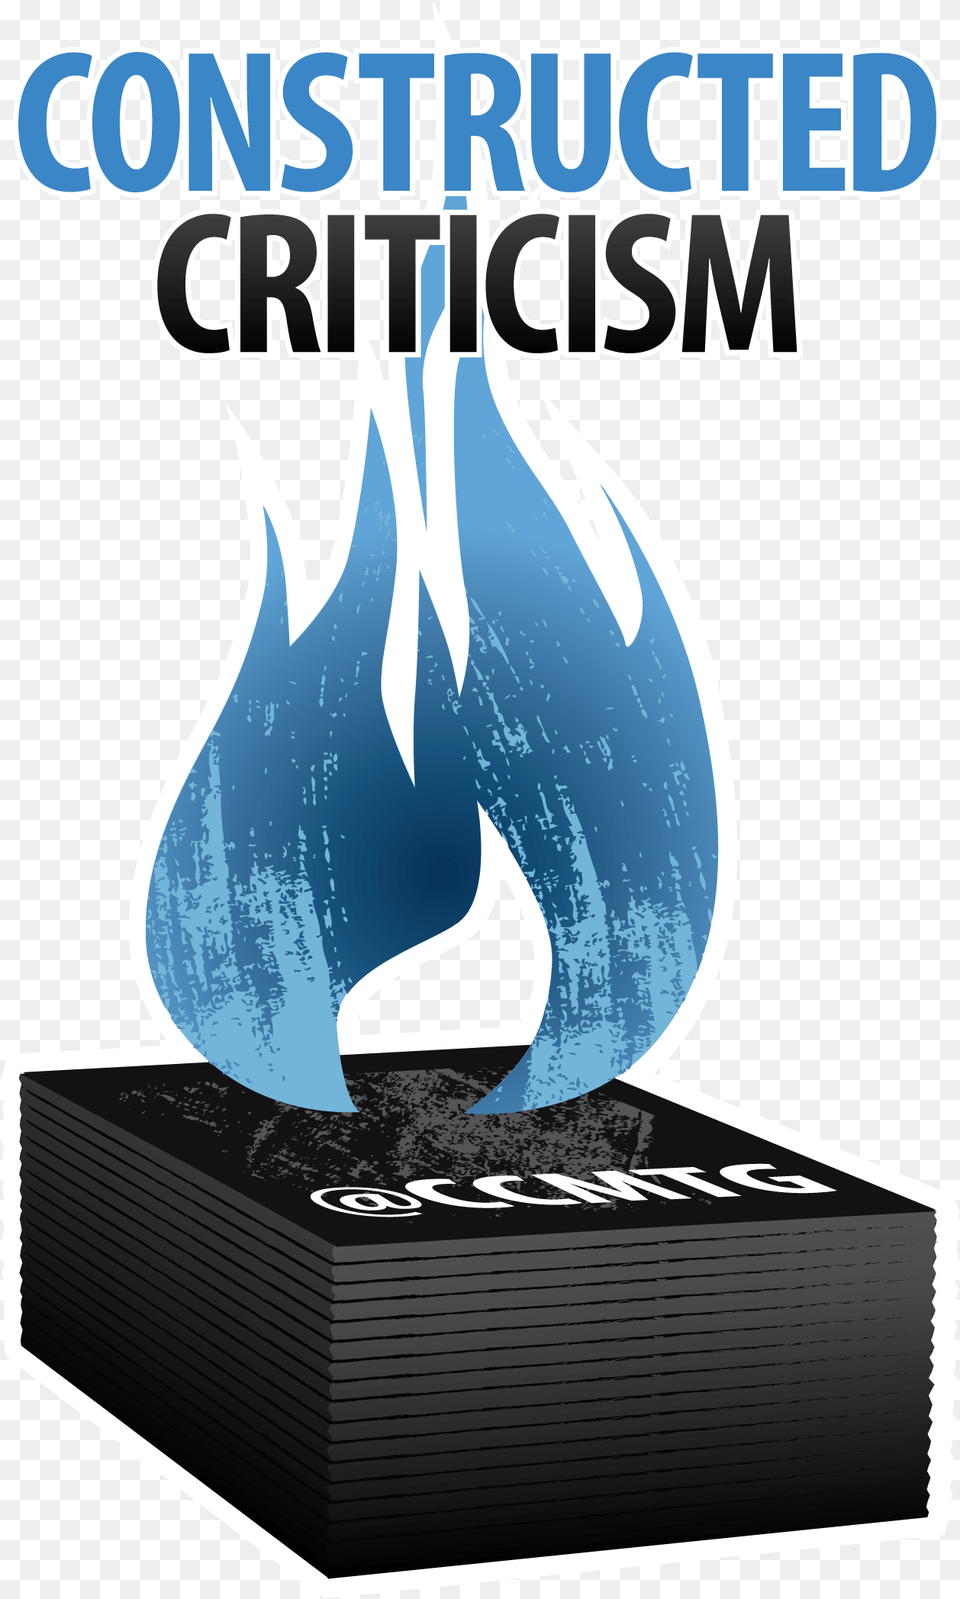 Ccmtg Tall Alt Stroke Constructed Criticism, Book, Publication, Fire, Flame Png